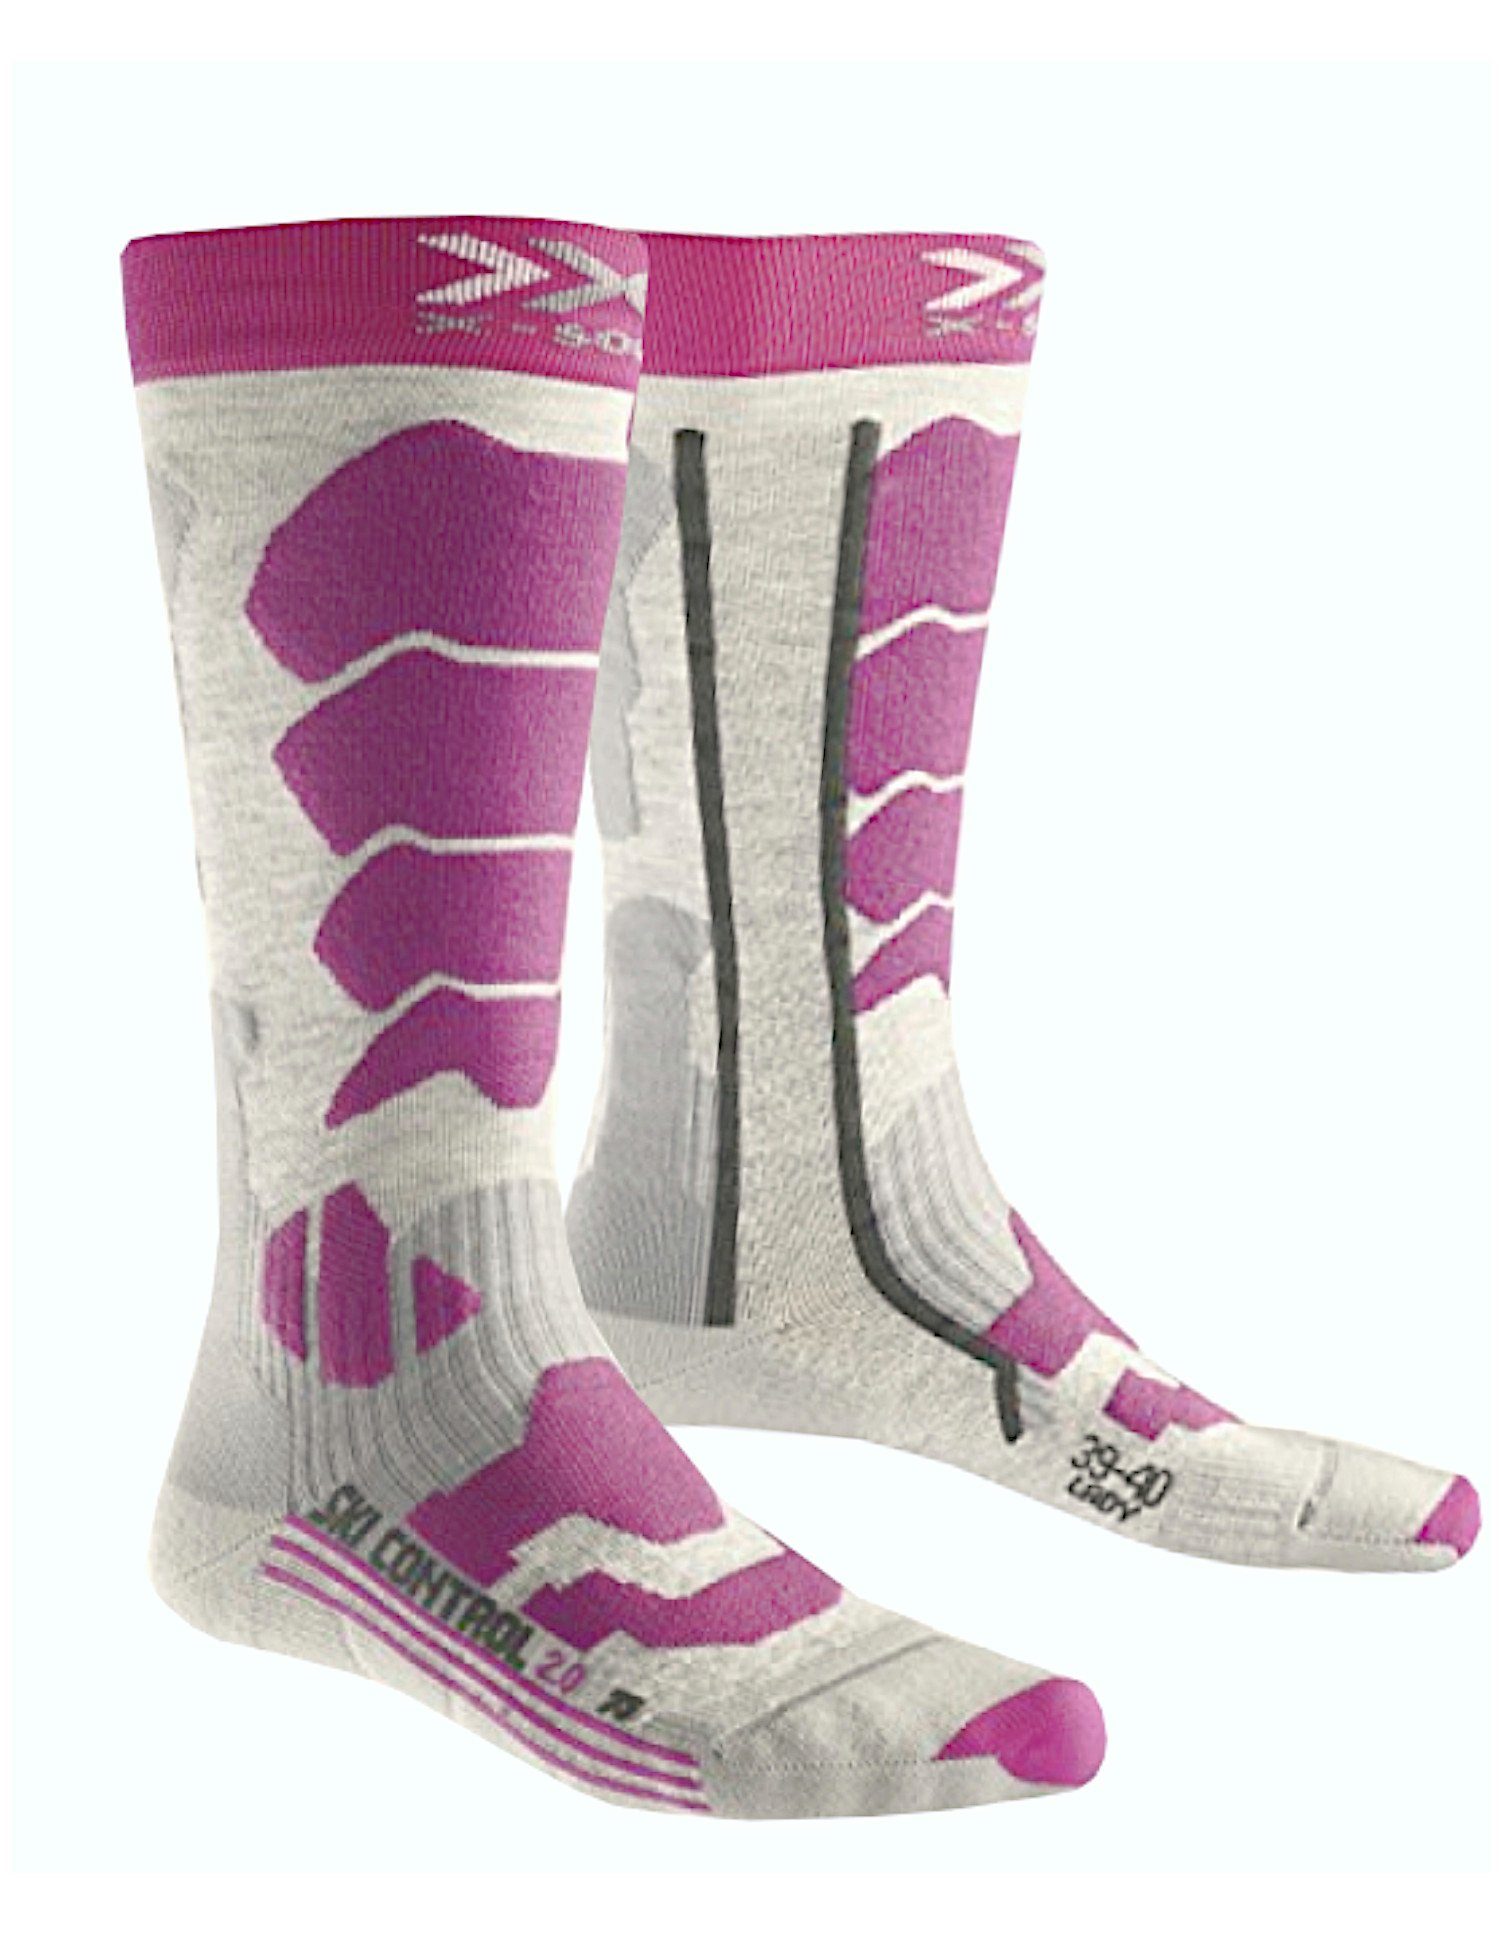 X-Socks Skisocken Ski Control 2.0 Women gepolsterte Dämpfungszonen grau-lila